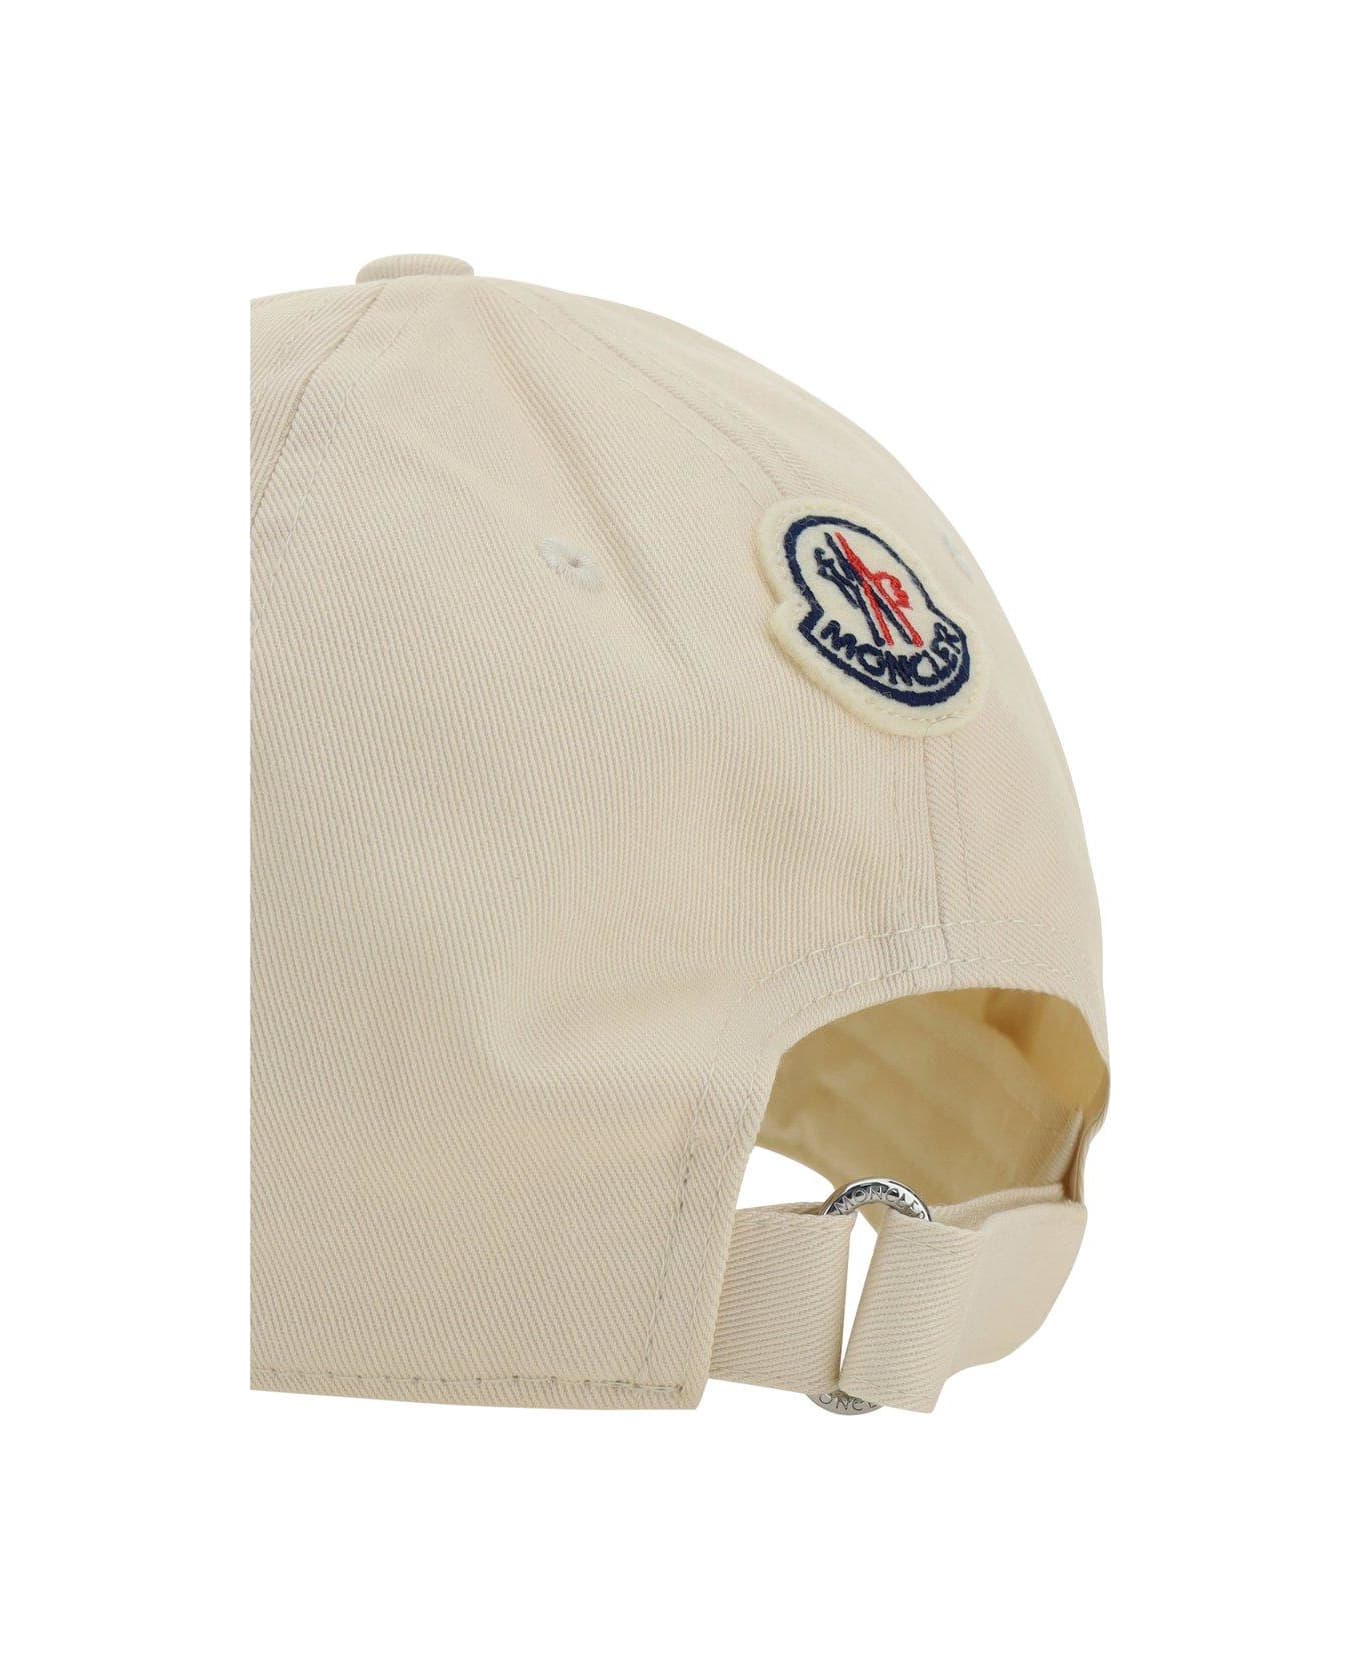 Moncler Logo Embroidered Baseball Cap - White